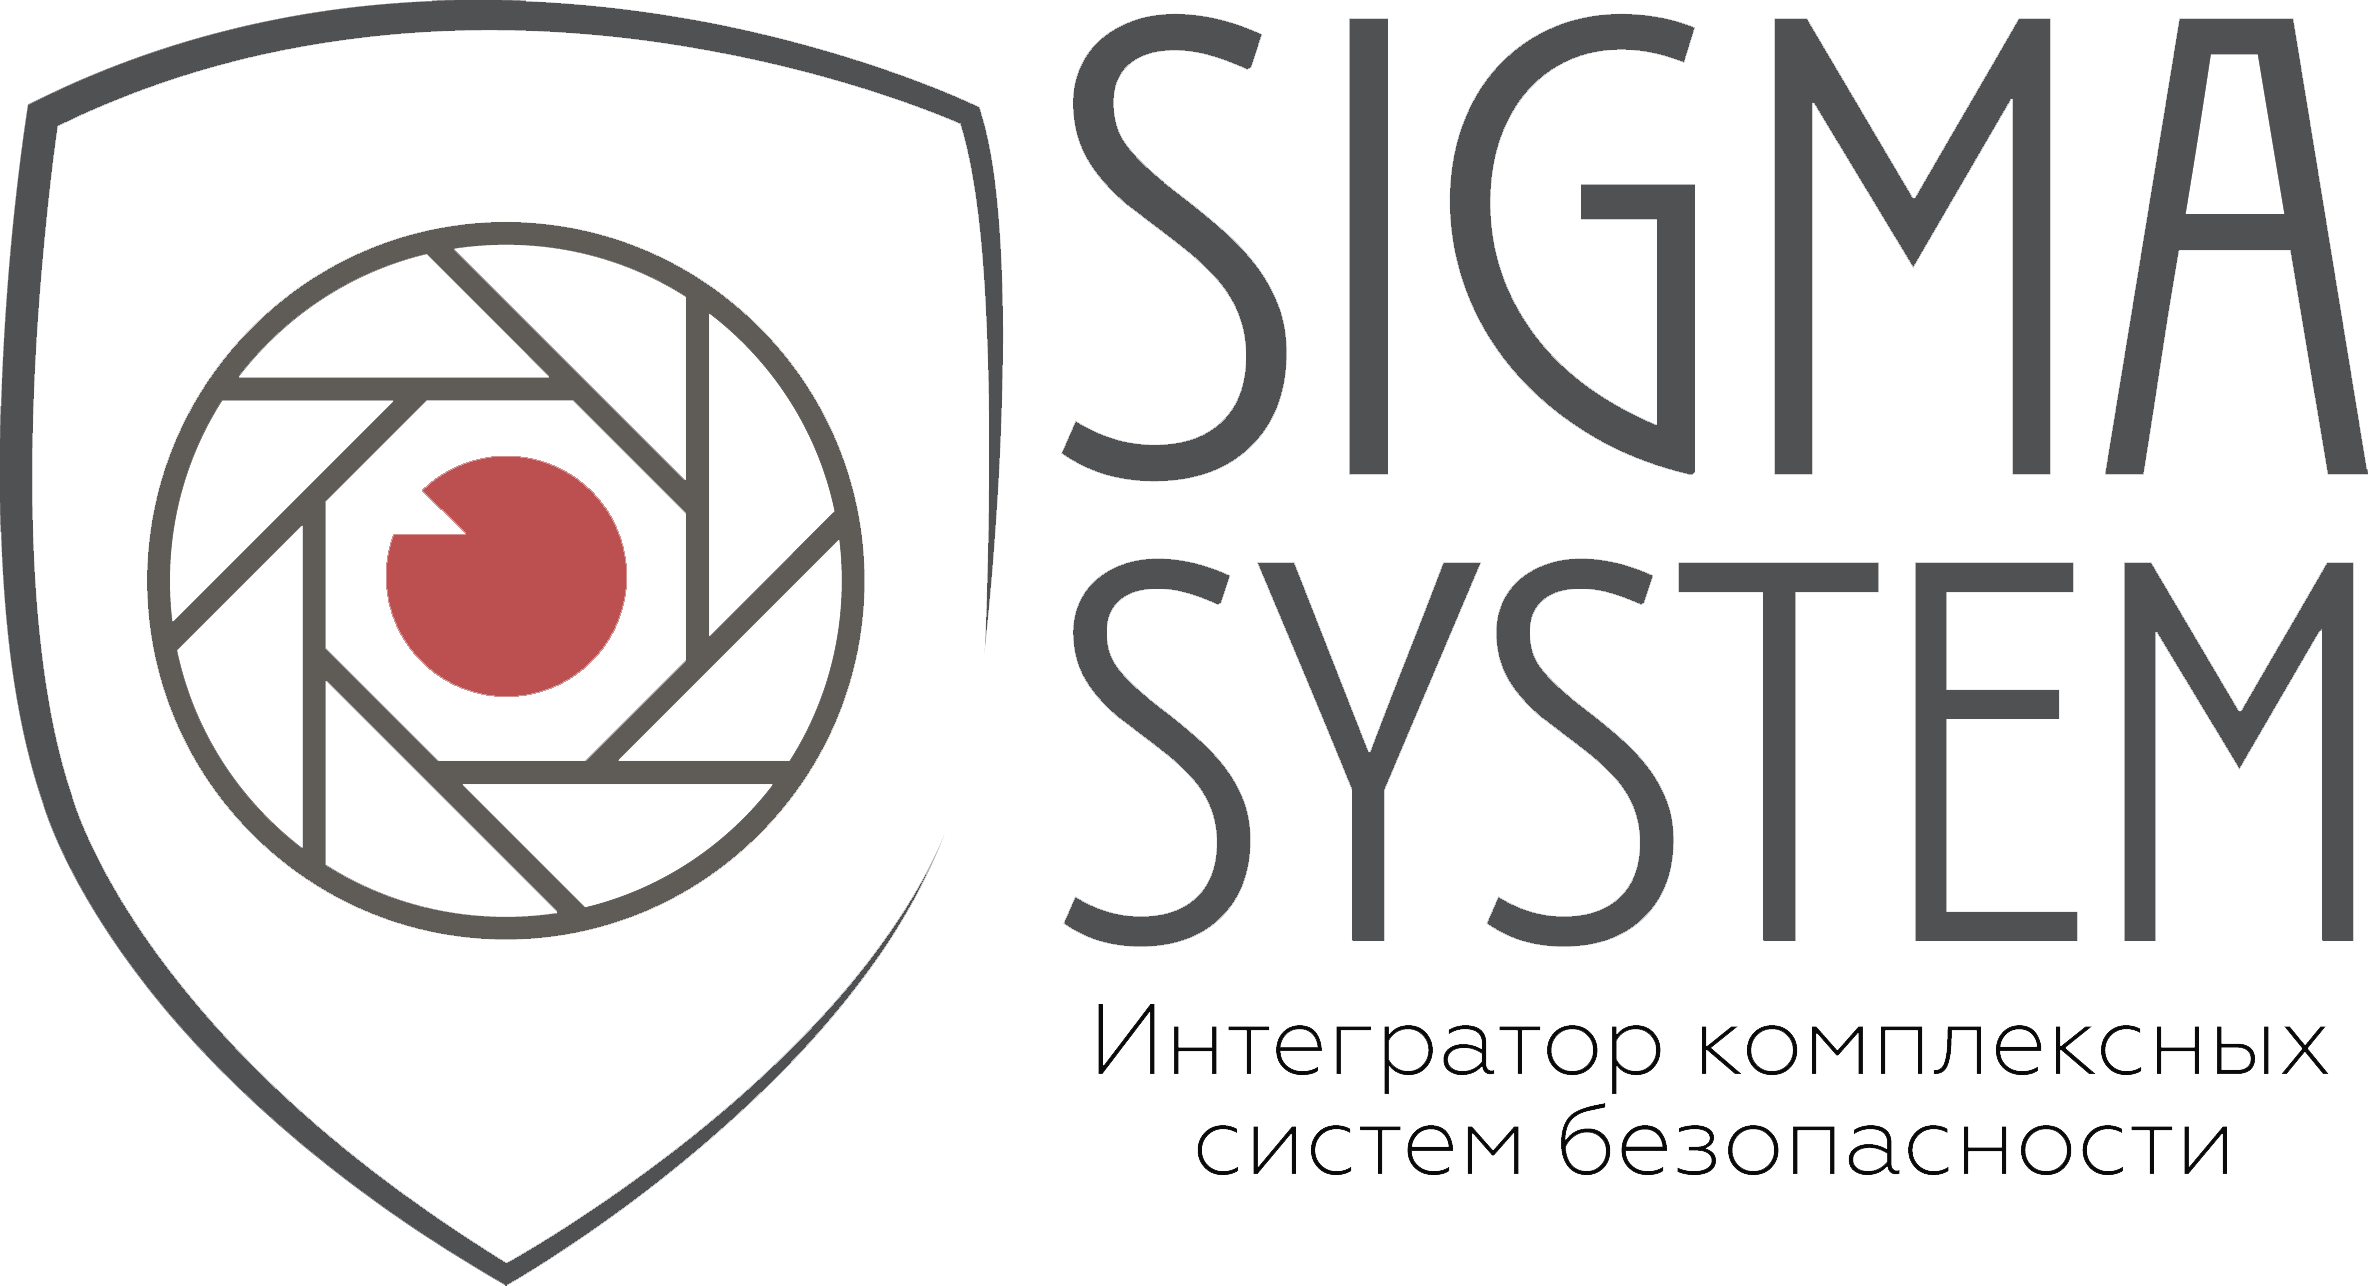 Sigma System